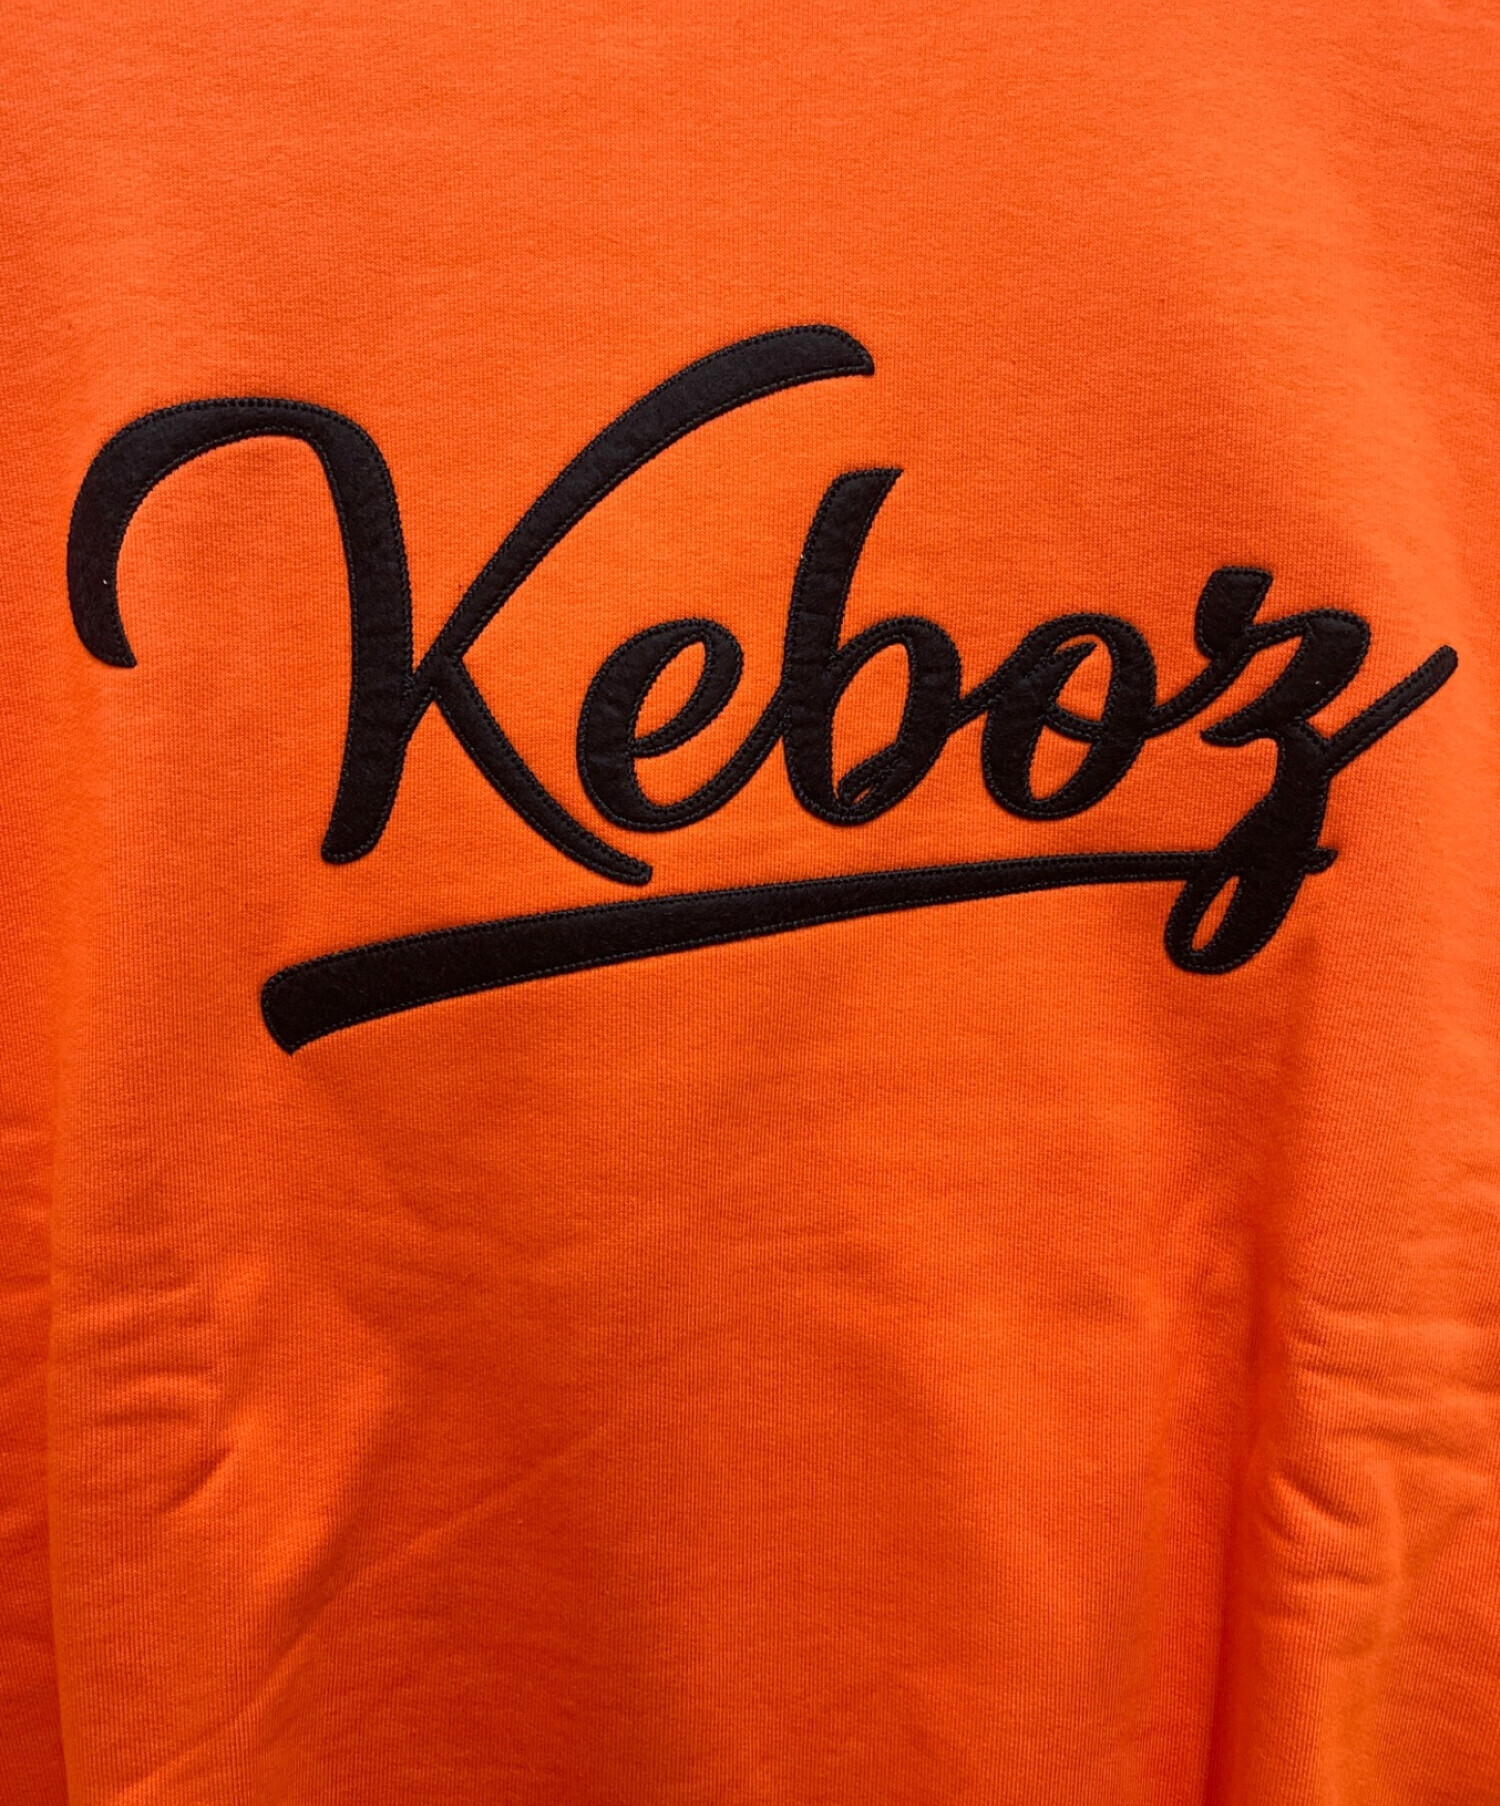 KEBOZ (ケボズ) ICON LOGO FELT SWEAT CREWNECK オレンジ サイズ:L